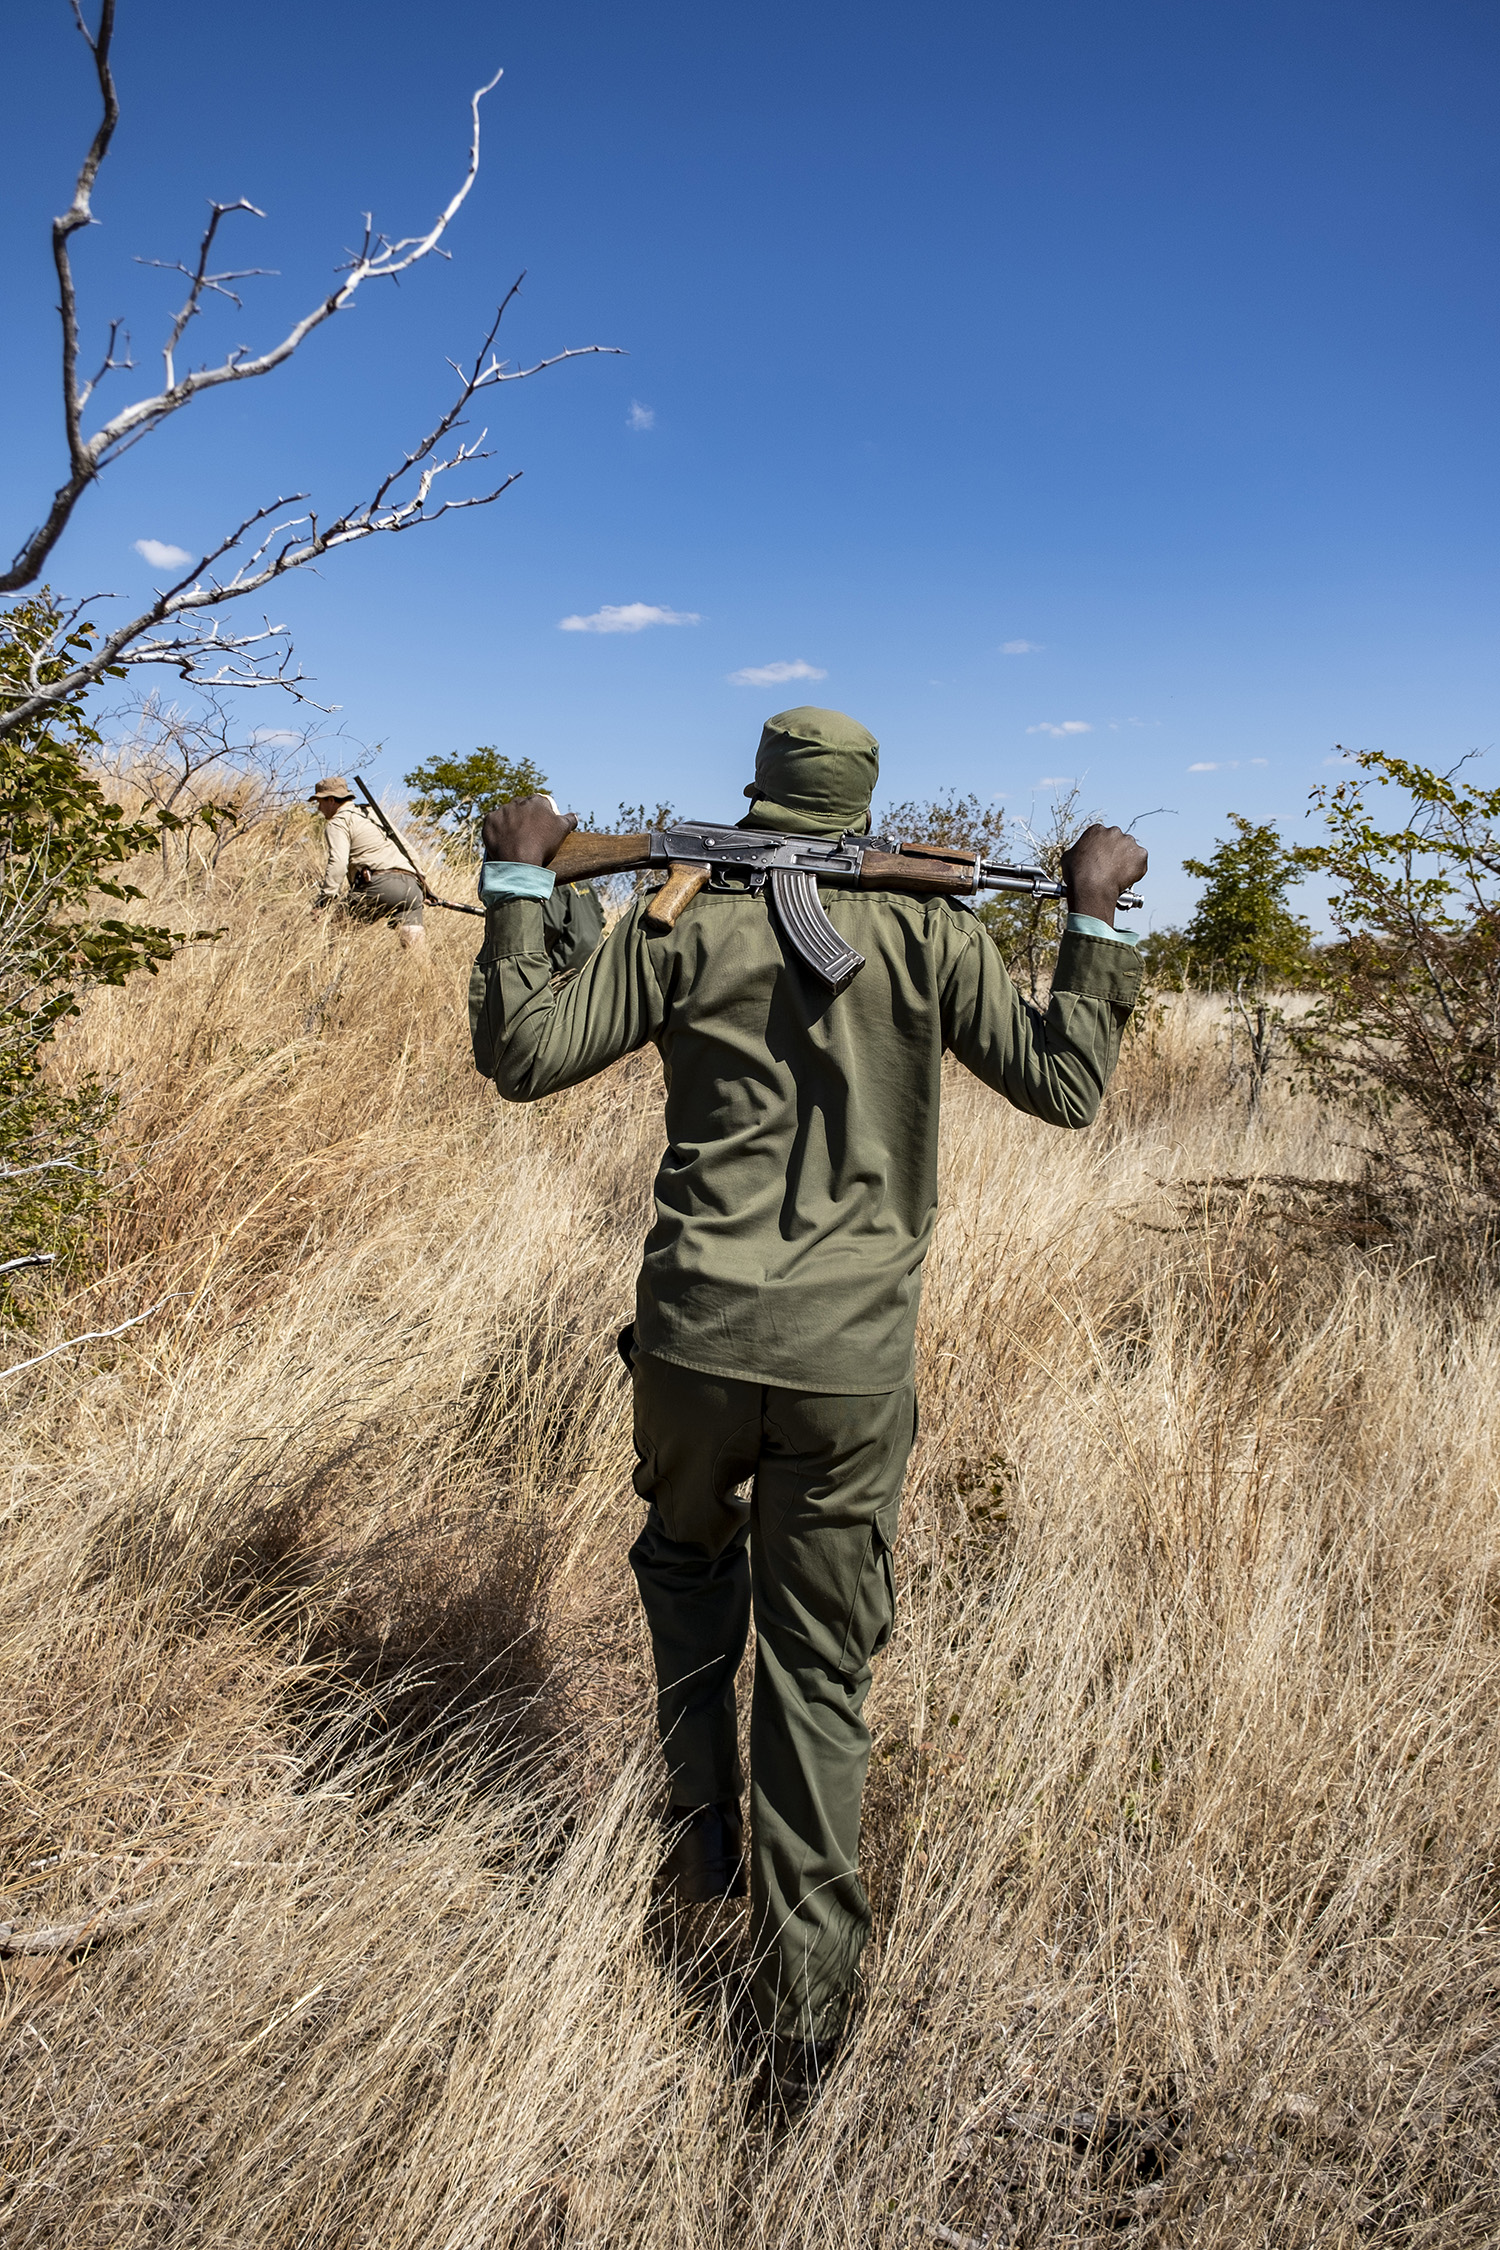 A Zimbabwe game scout carries an AK-47.